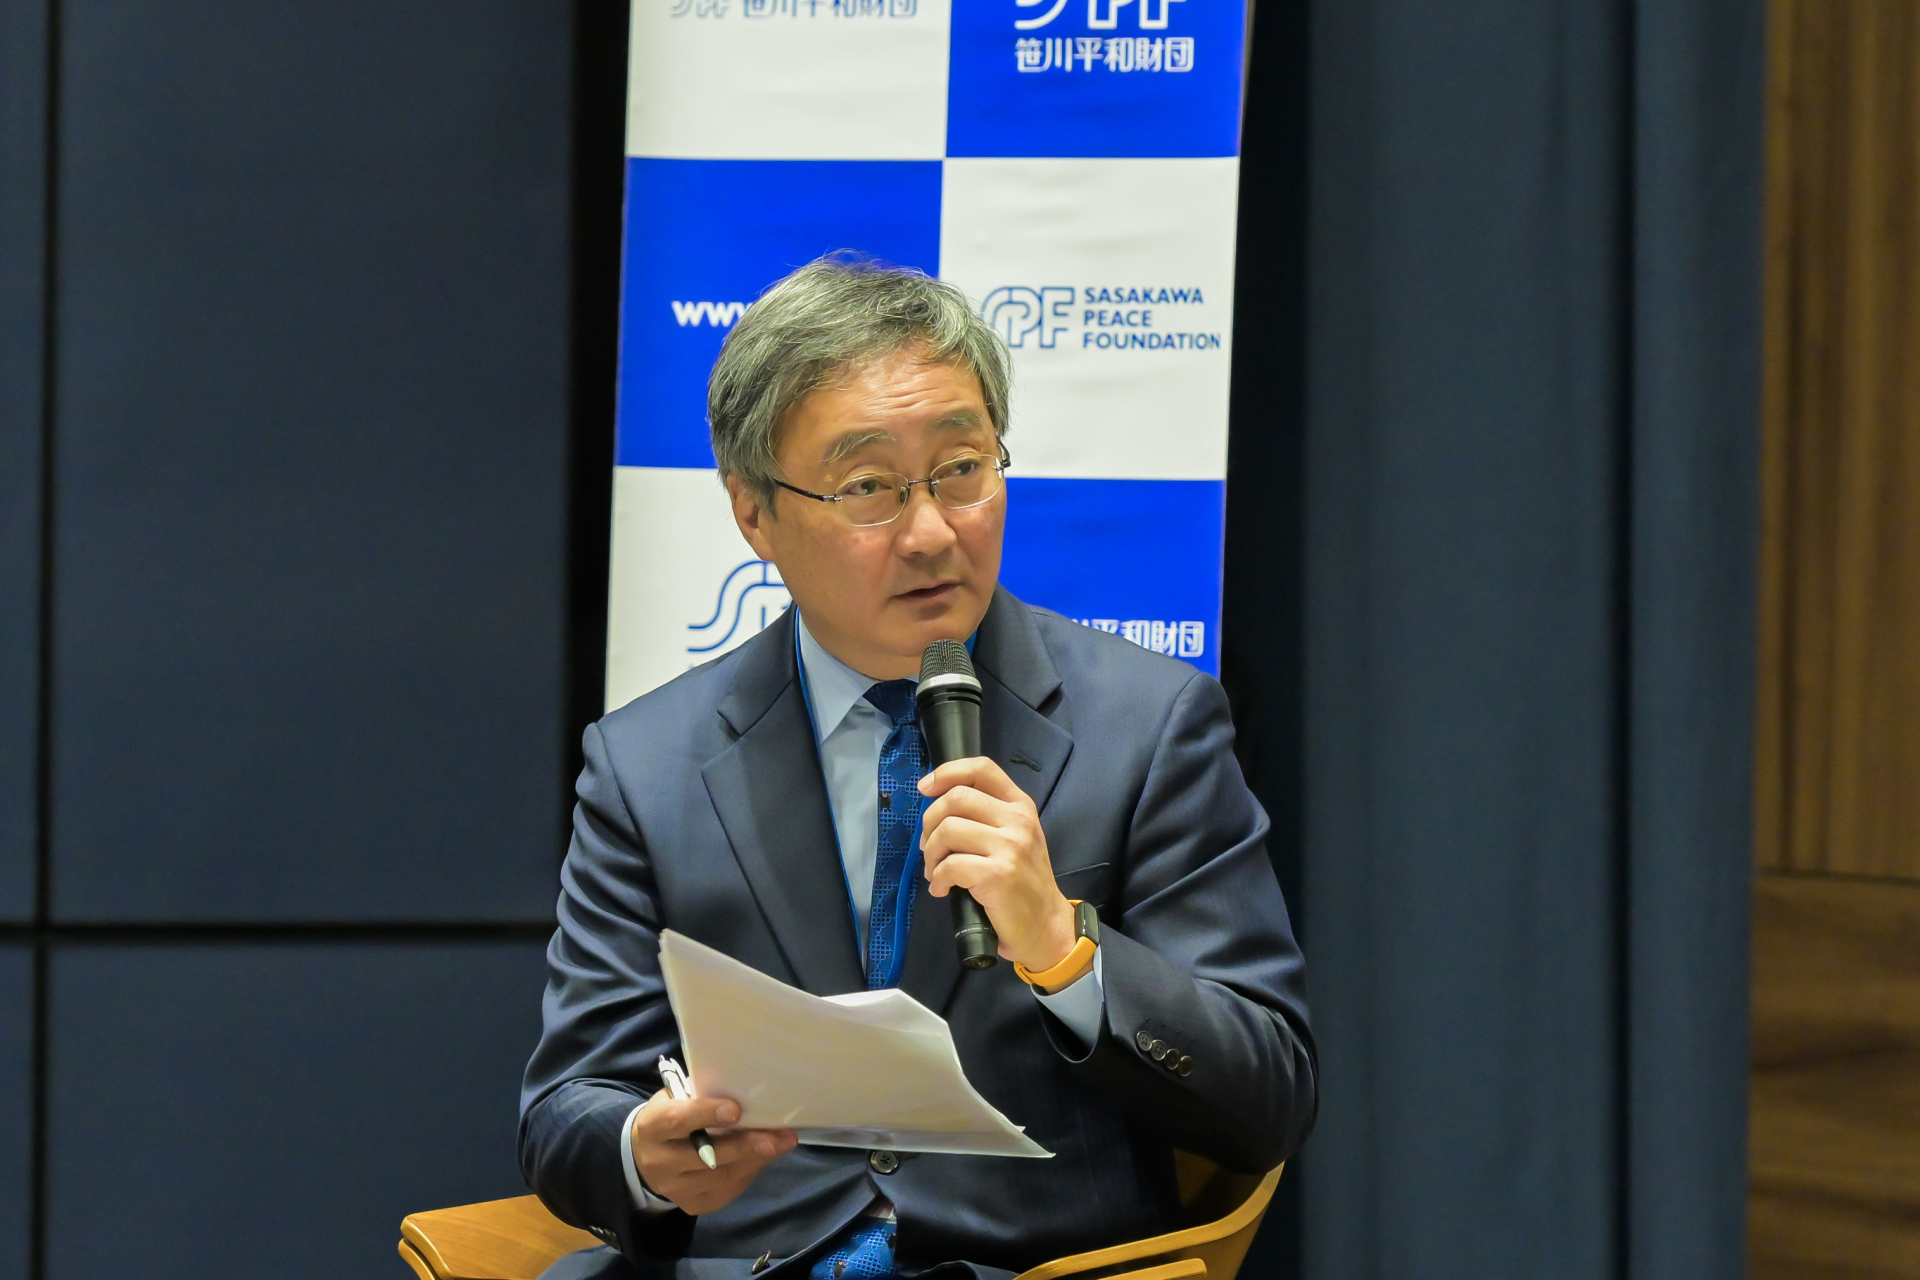 Shibusawa and Company CEO Ken Shibusawa